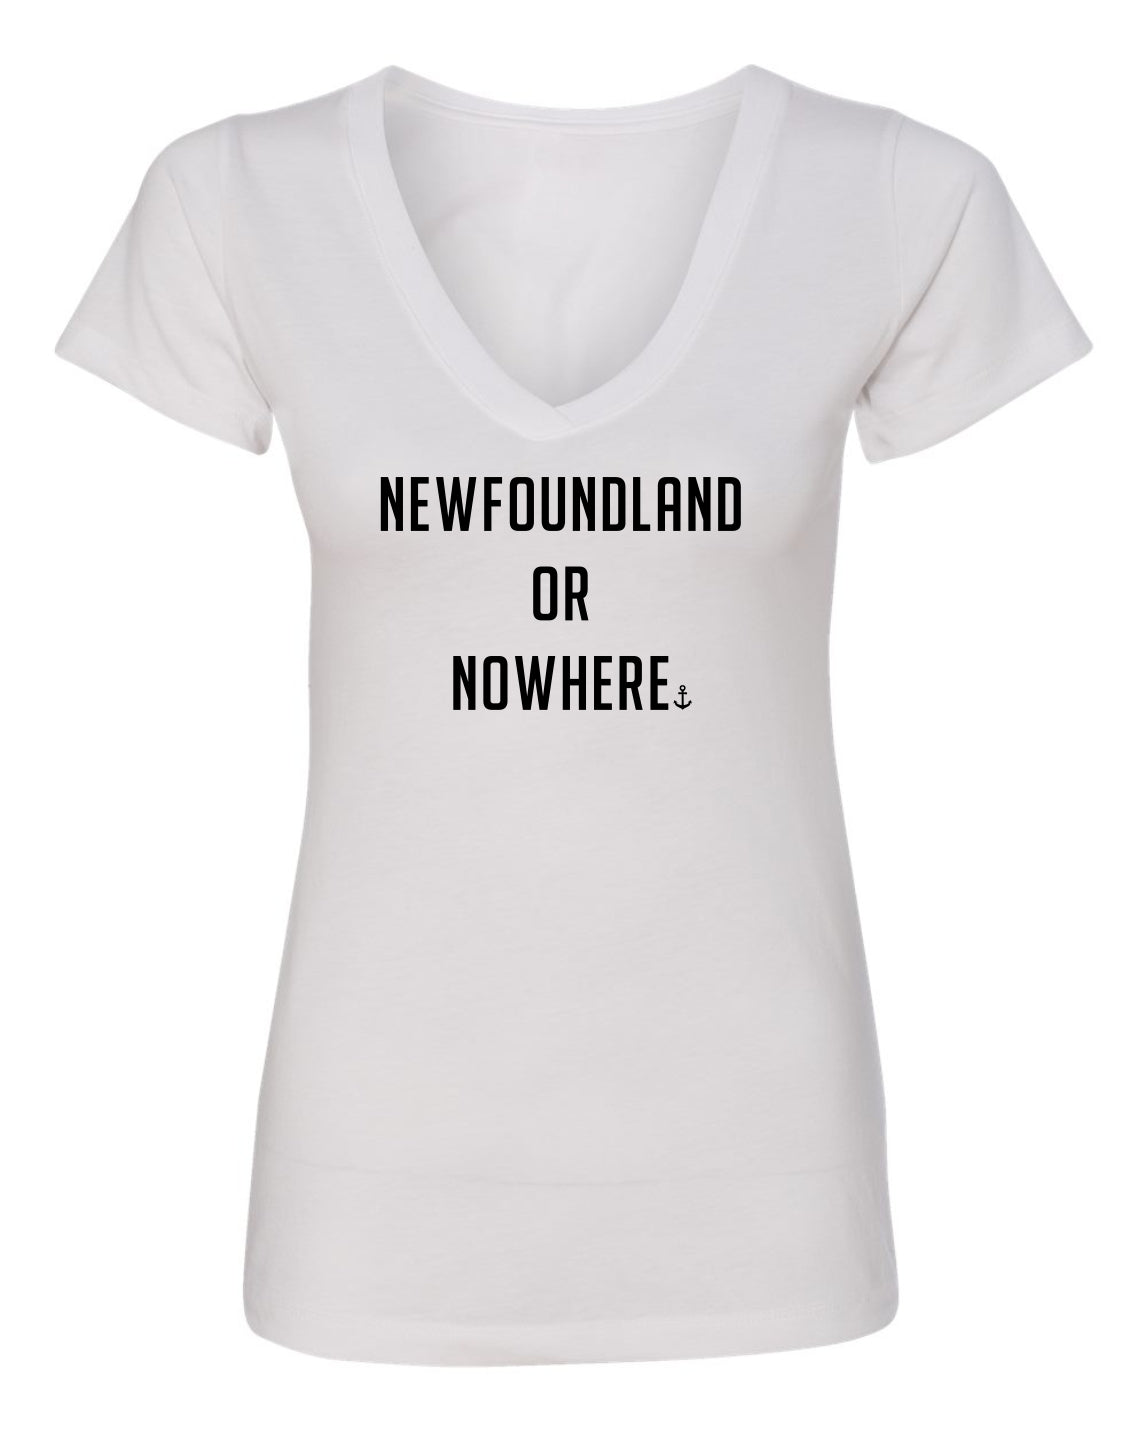 "Newfoundland Or Nowhere" T-Shirt